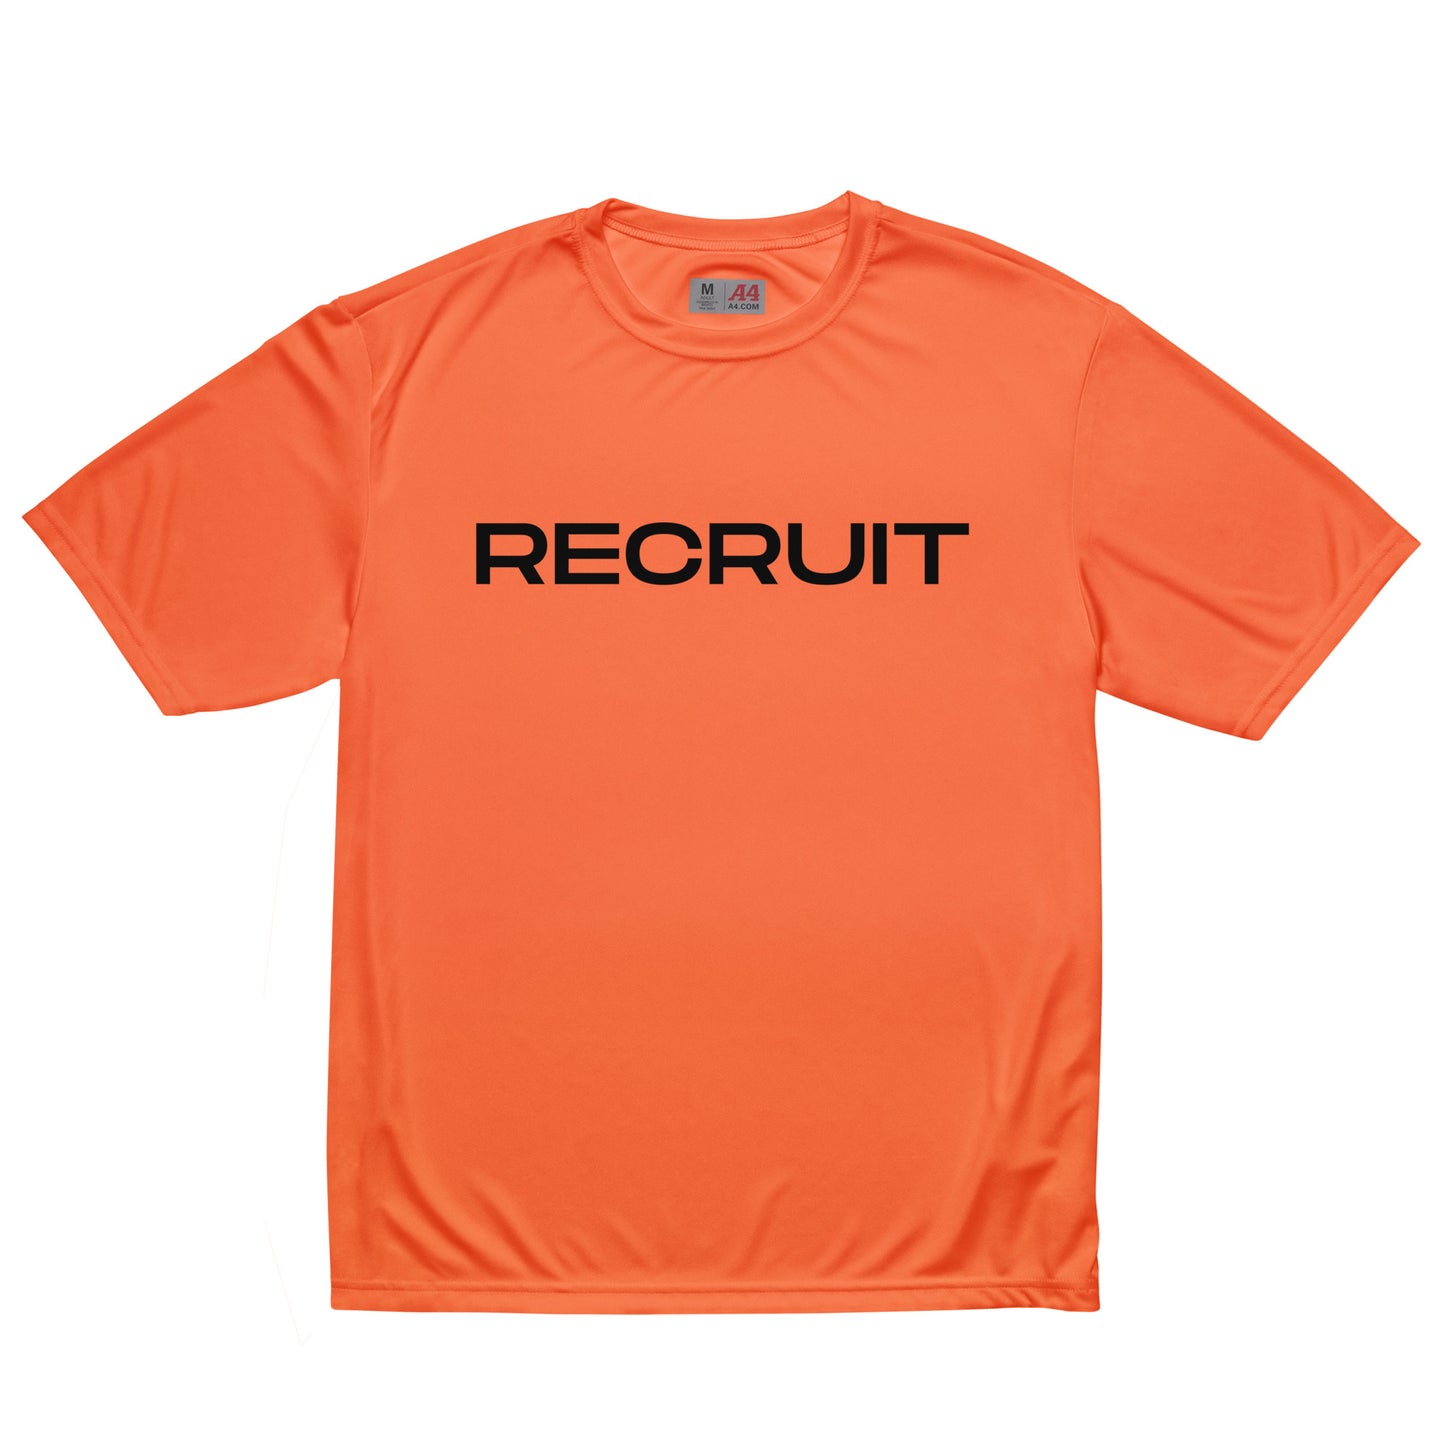 Unsigned 2030 Recruit - Unisex performance crew neck t-shirt